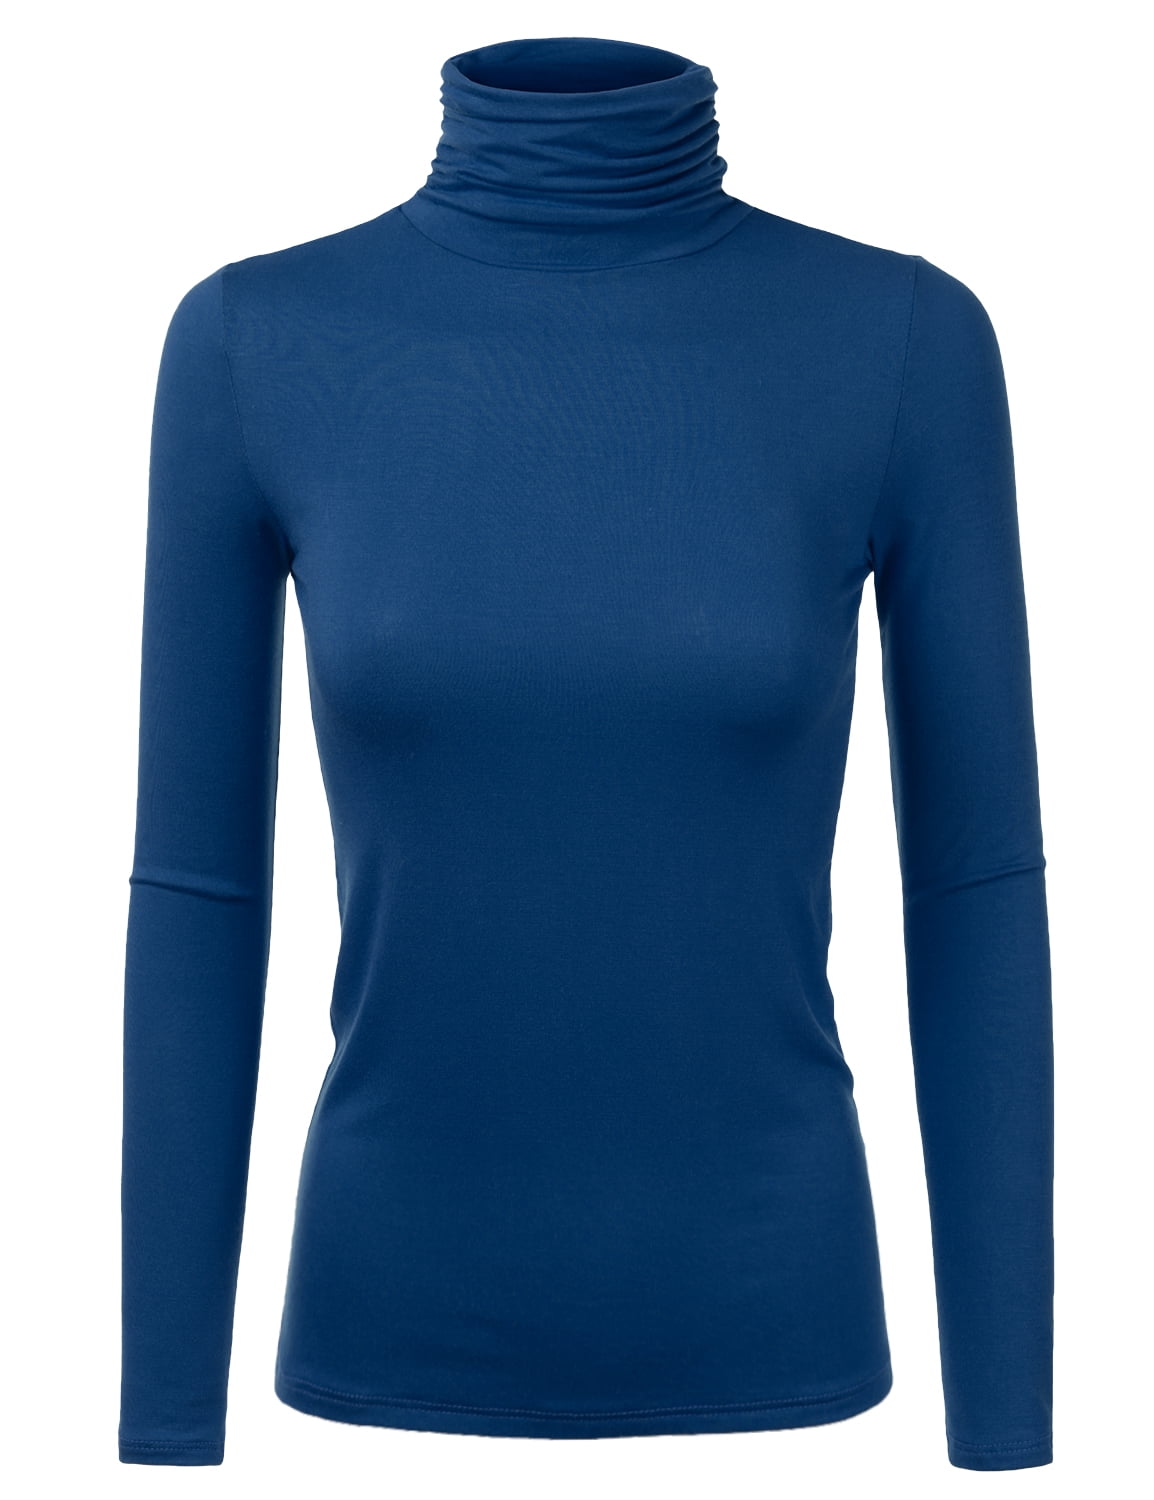 Doublju - Doublju Women's Turtleneck Top Pullover Long Sleeve ...